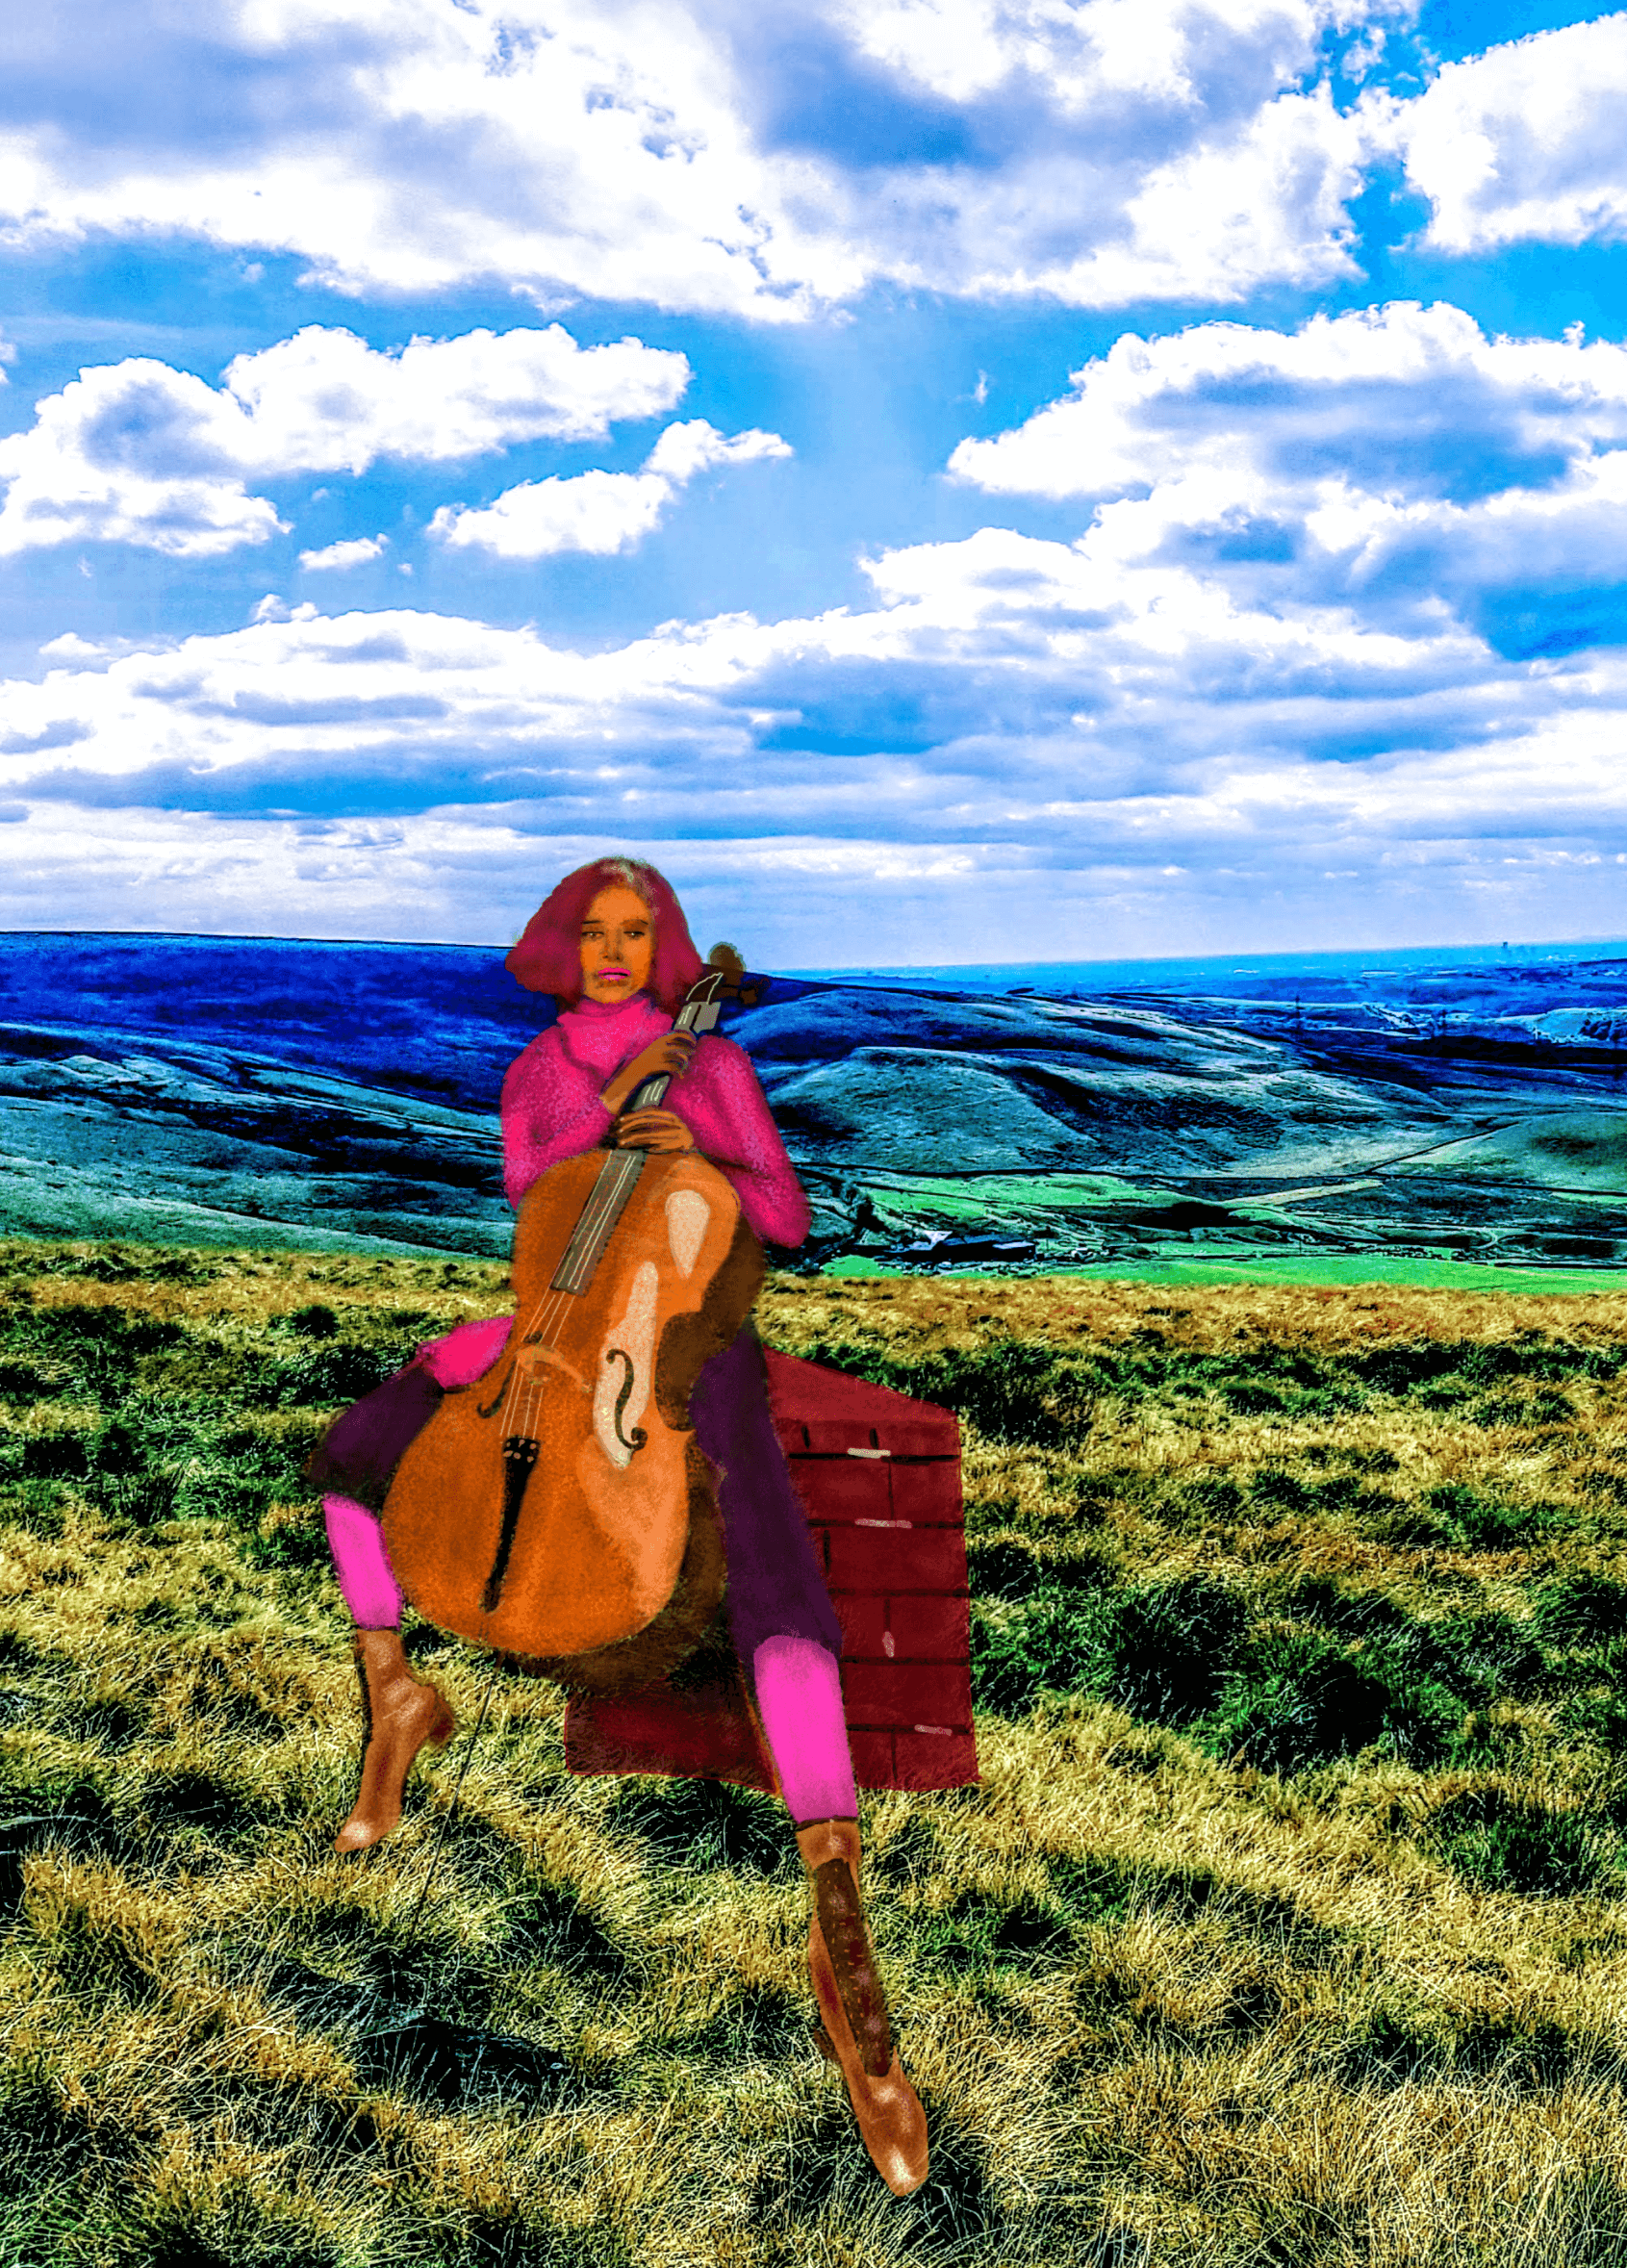 The Yorkshire cellist